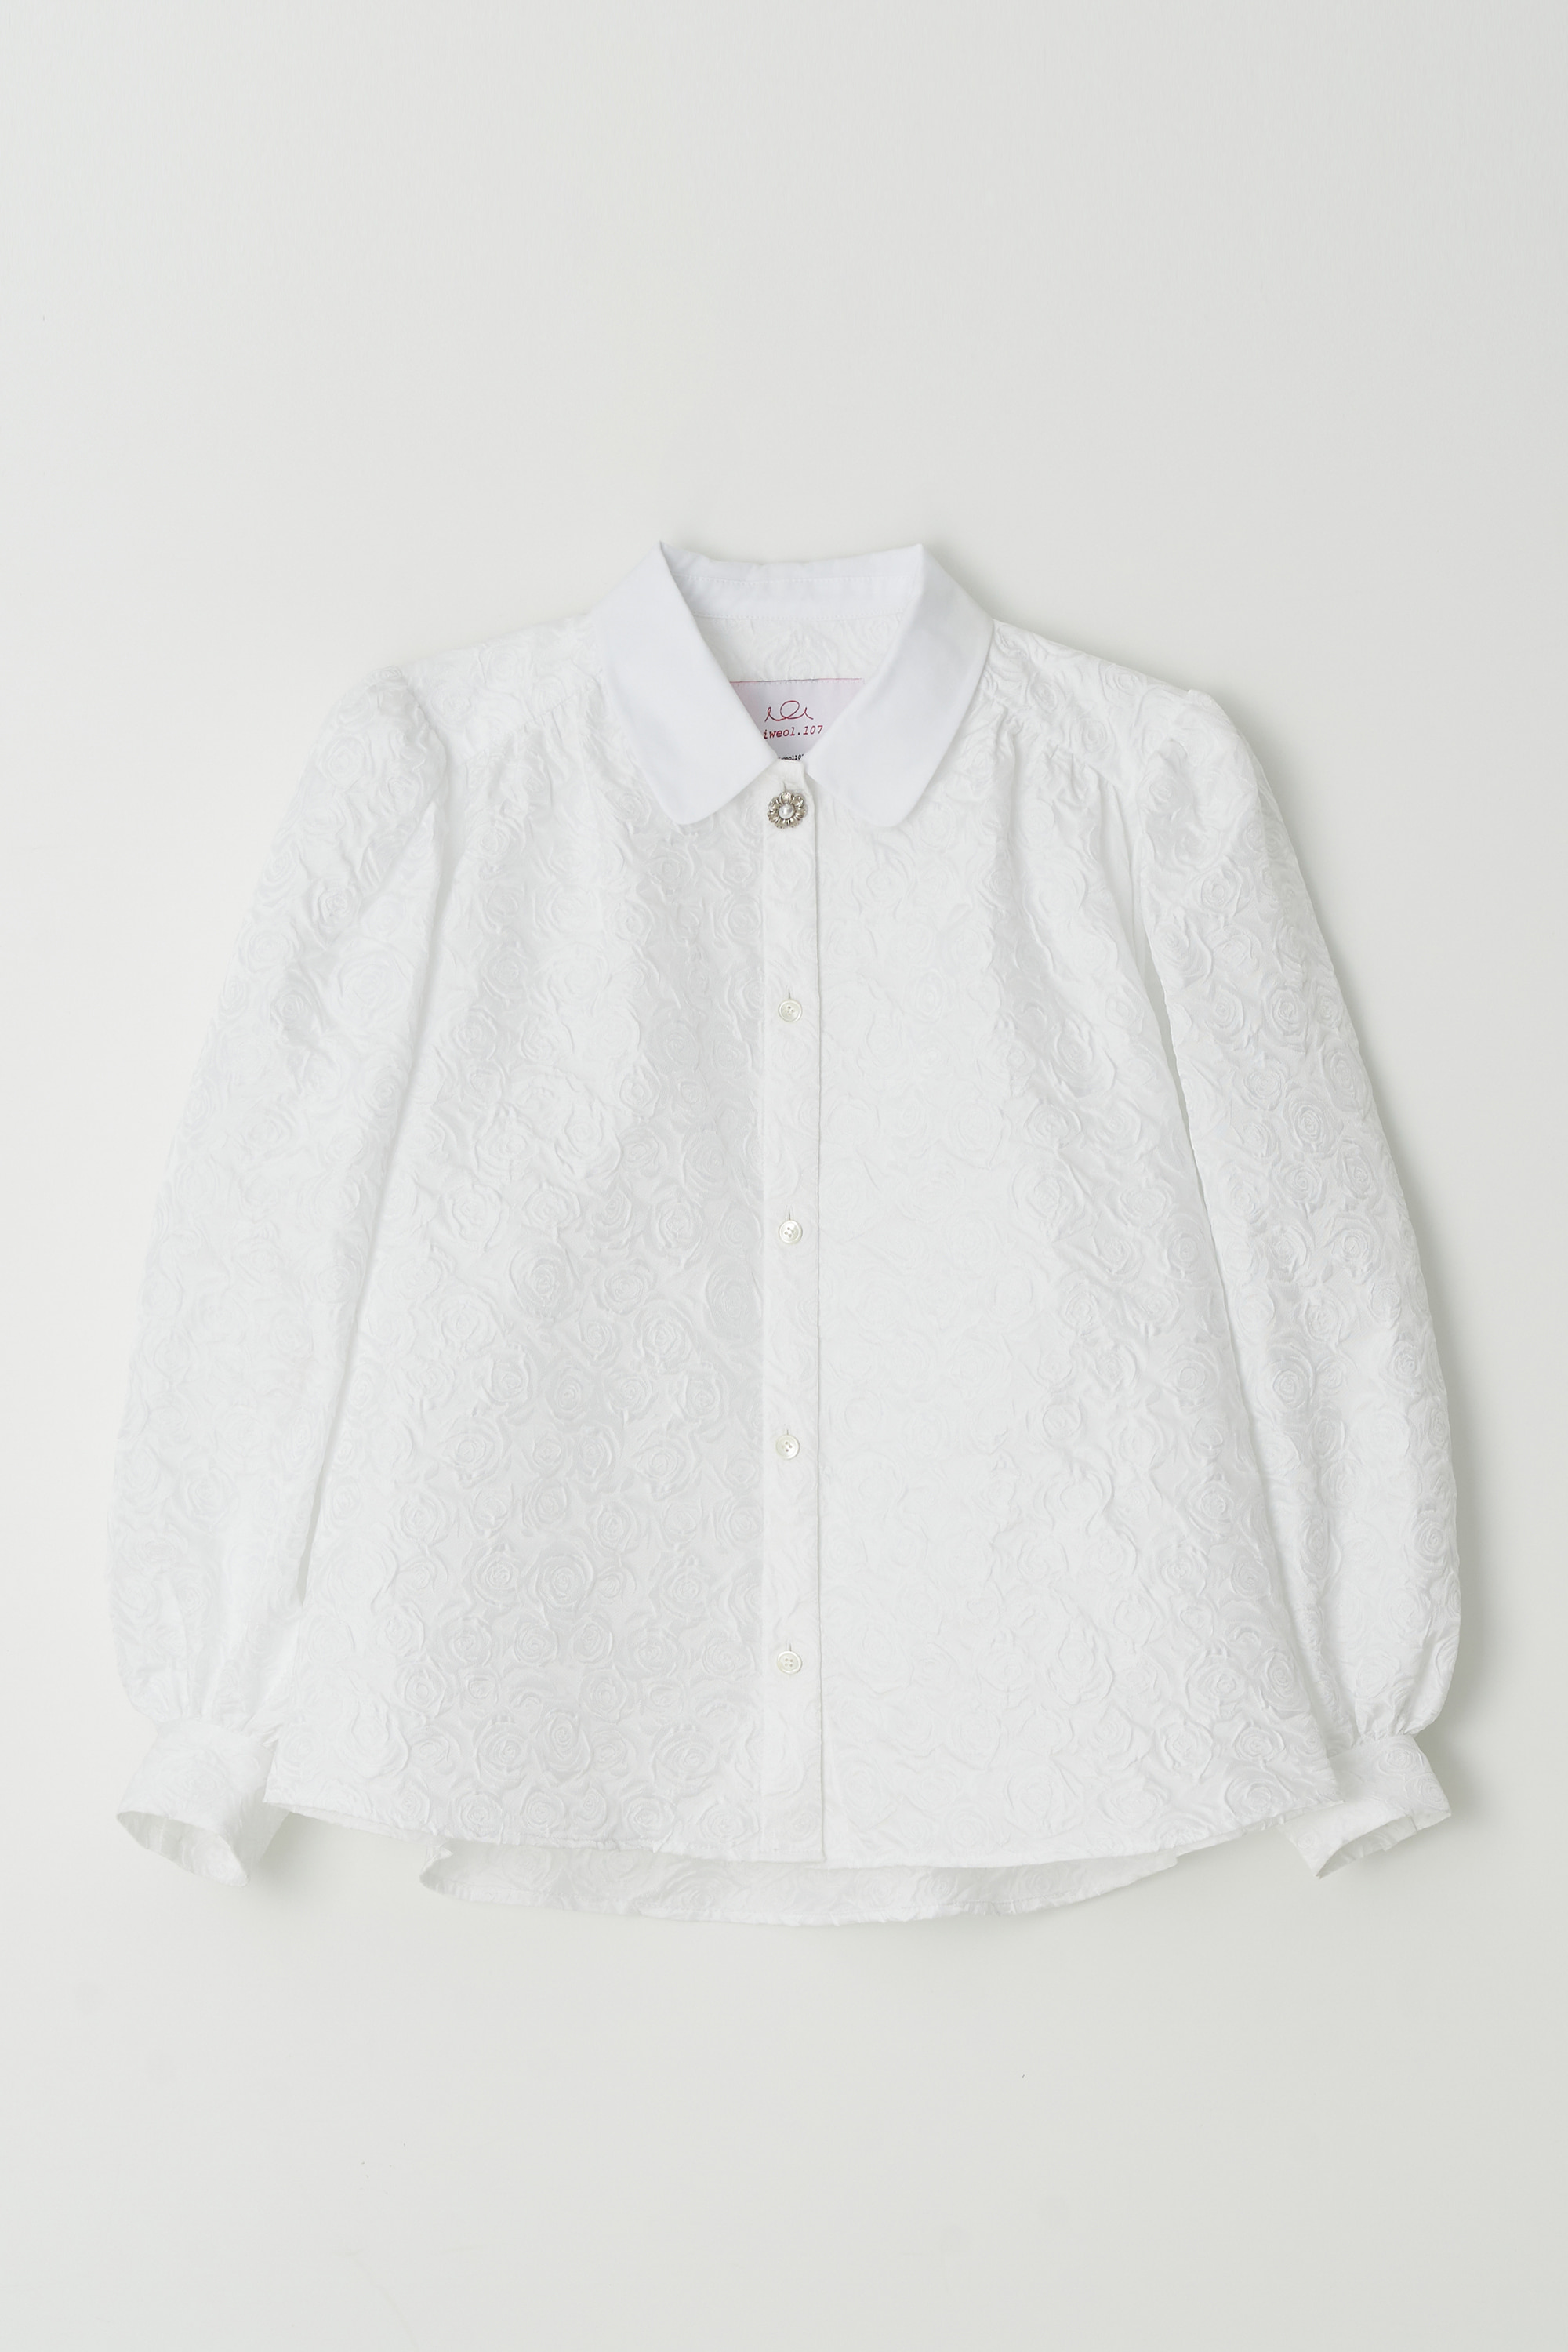 jacquard puff shirt (white)